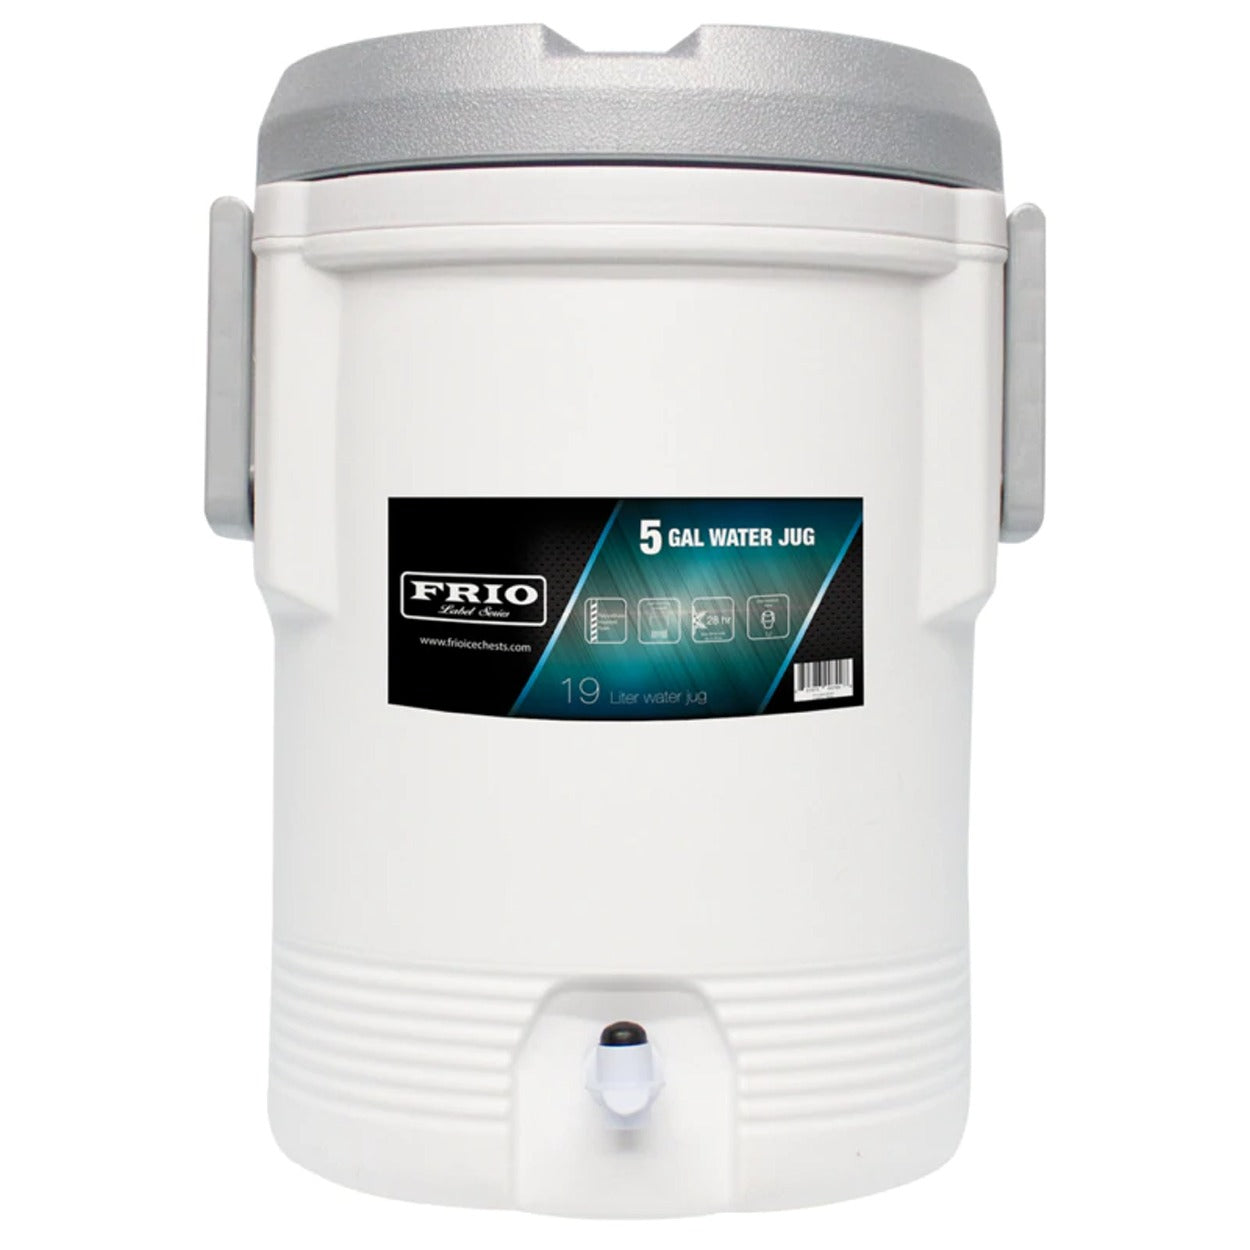 Custom Team Sideline Water Cooler | 5 Gallon